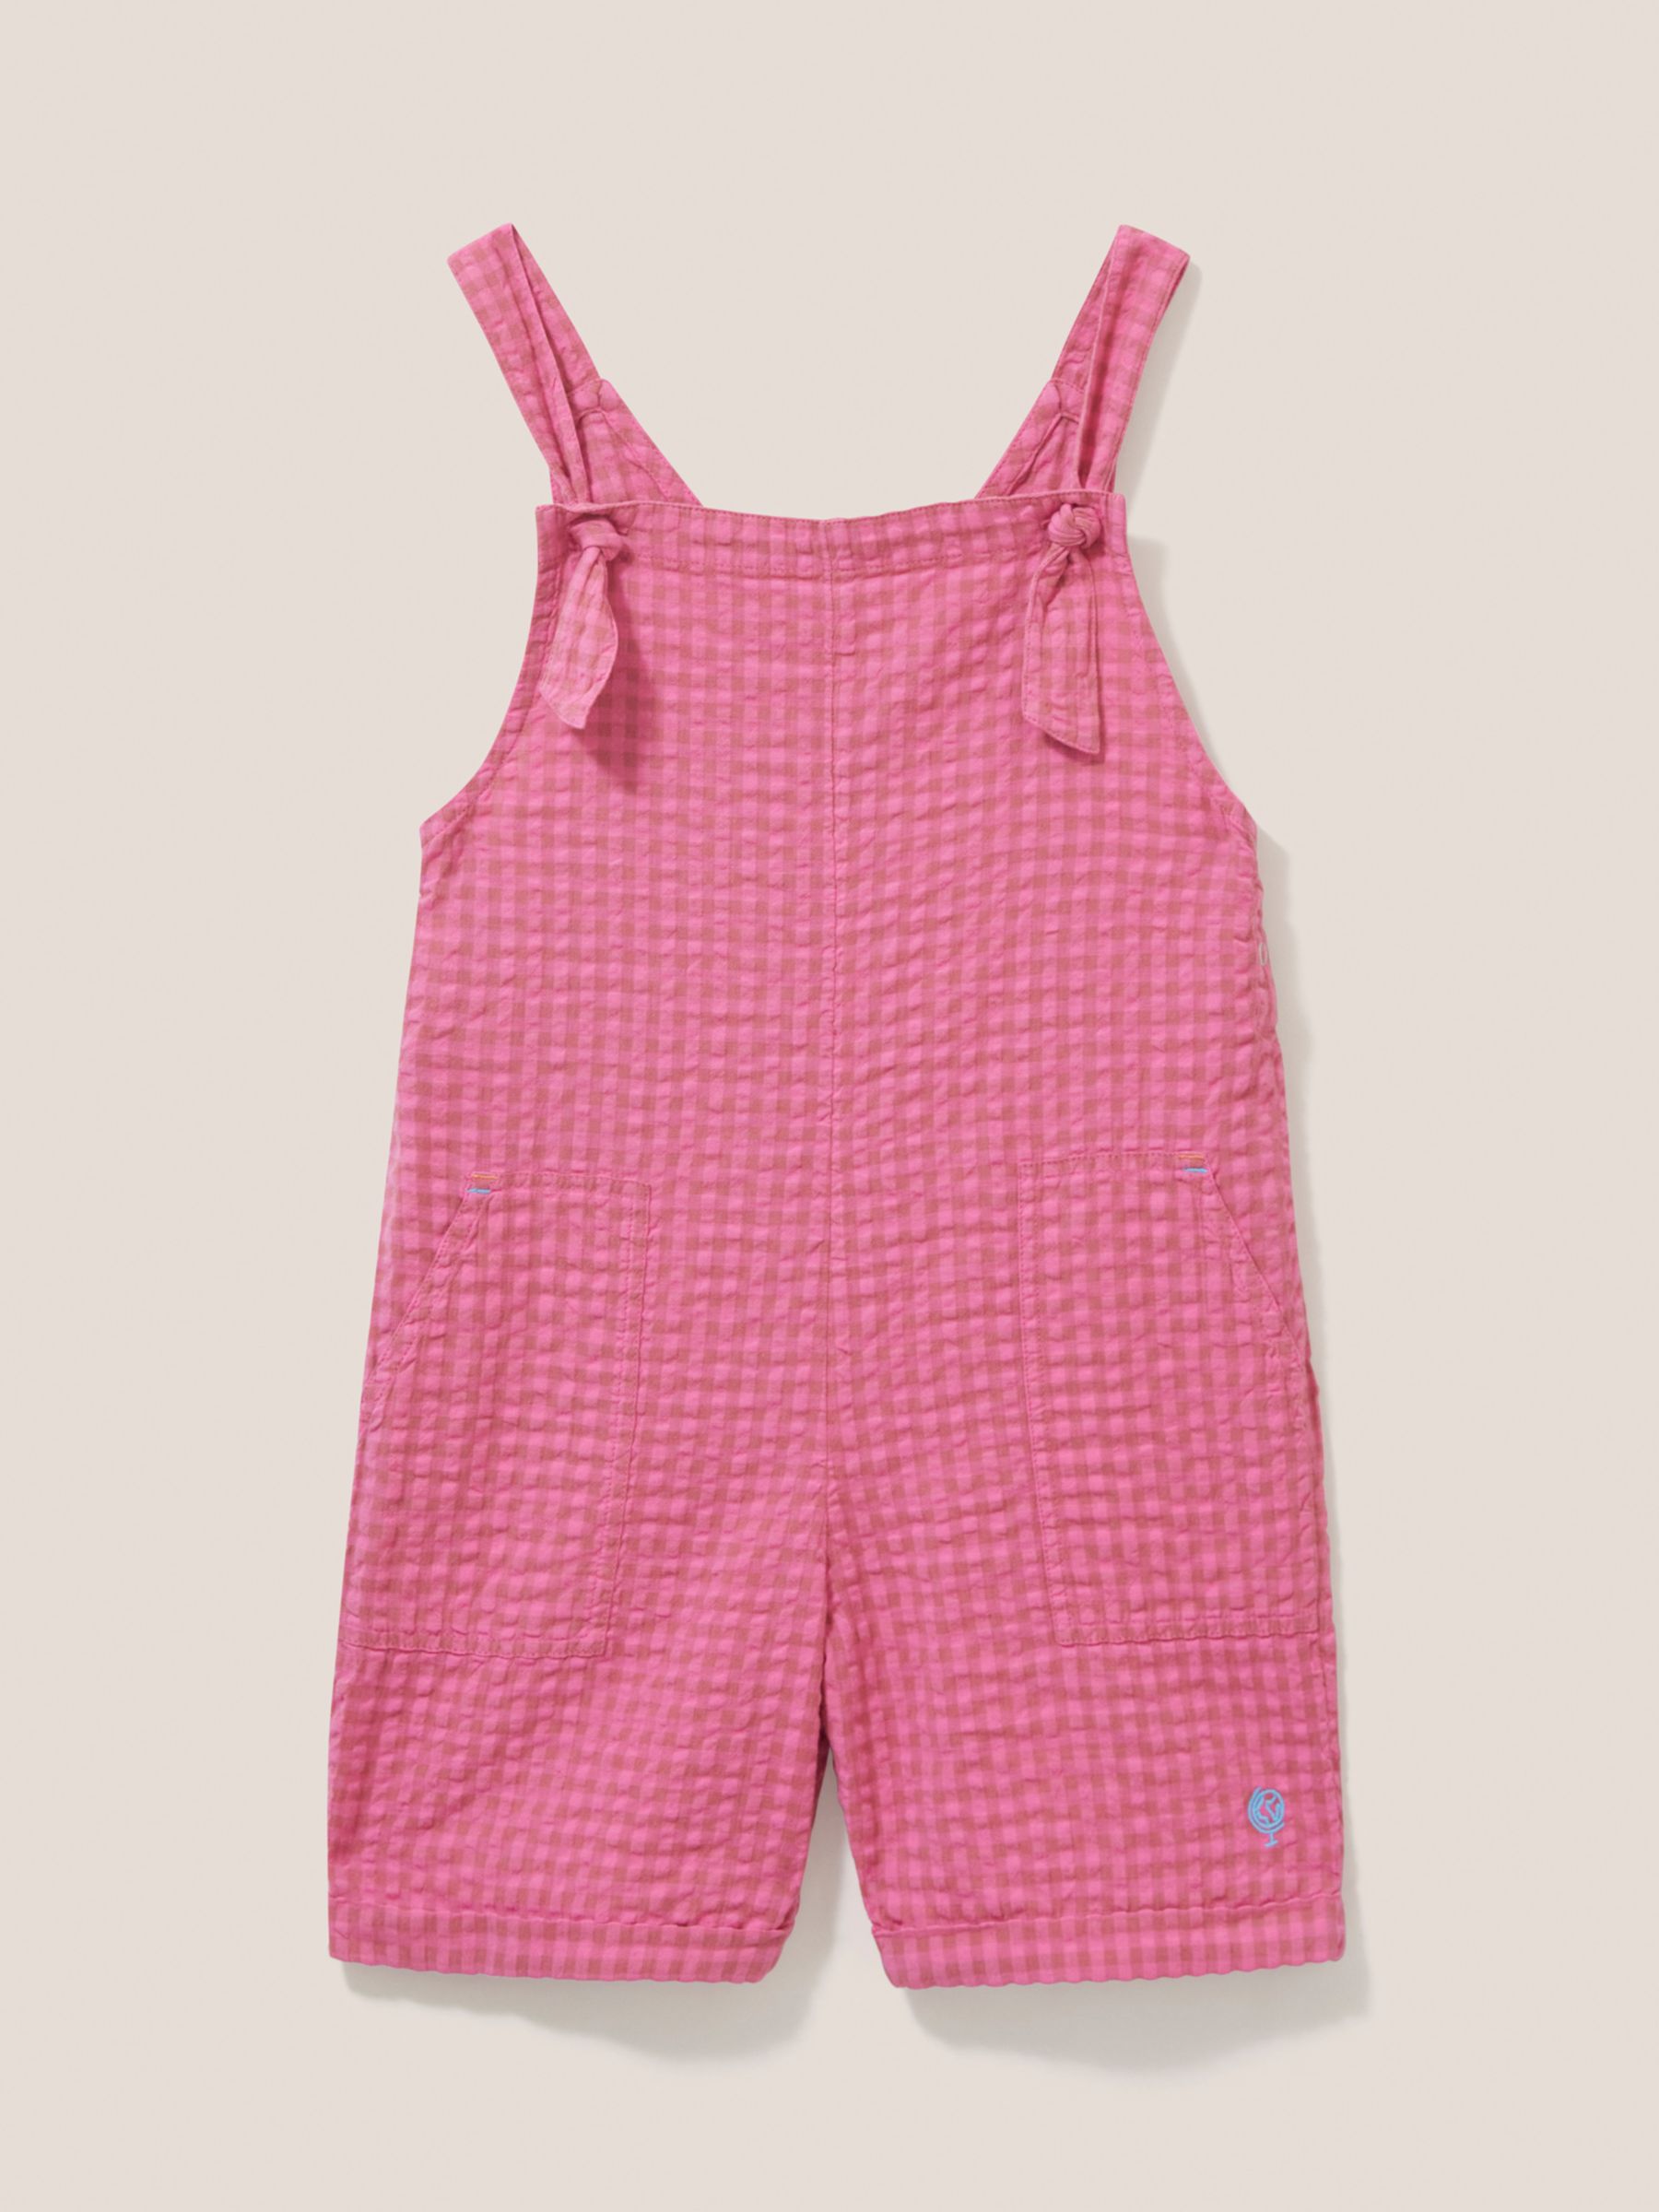 White Stuff Kids' Gingham Seersucker Playsuit, Bright Pink